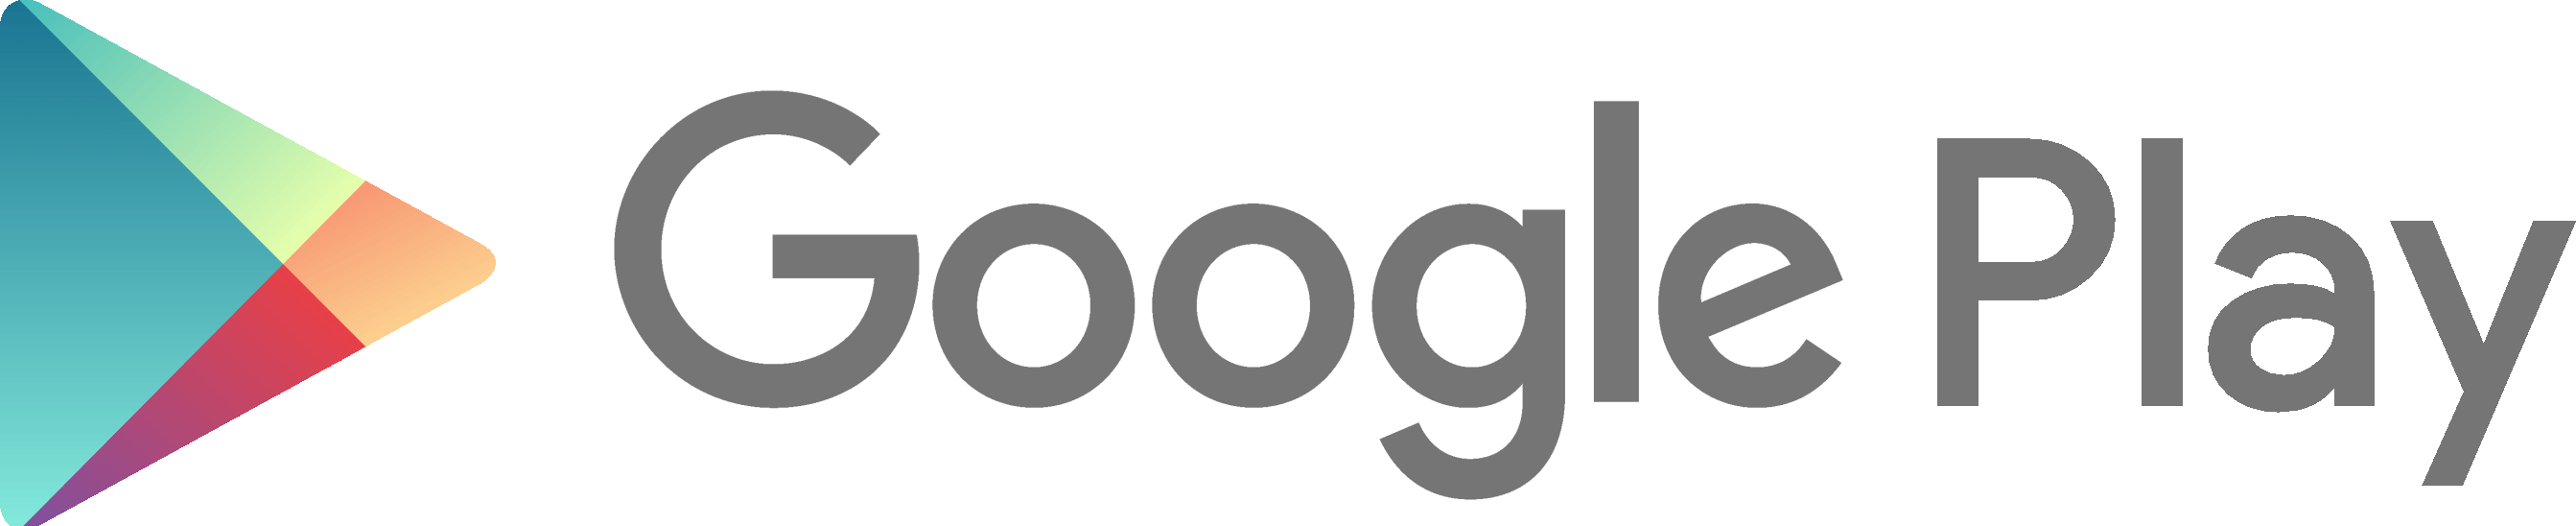 Google Play Logo - Image - Google Play logo 2015.png | Logopedia | FANDOM powered by Wikia